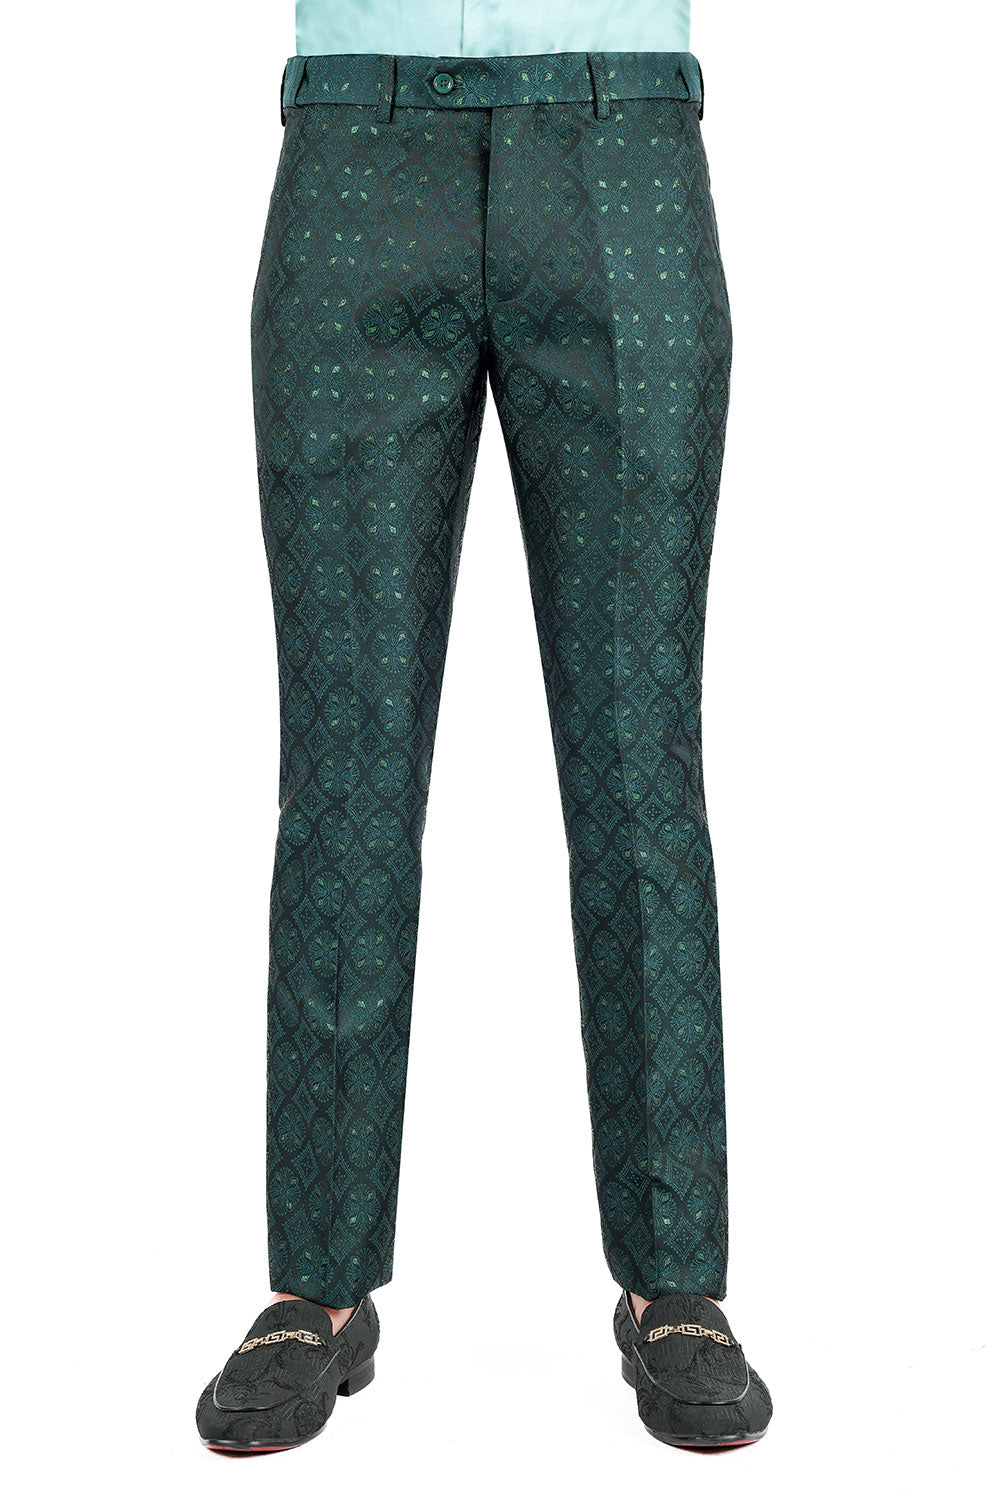 BARABAS Men's Decorative Geometric Printed Chino Pants 3CP05 Hunter Green